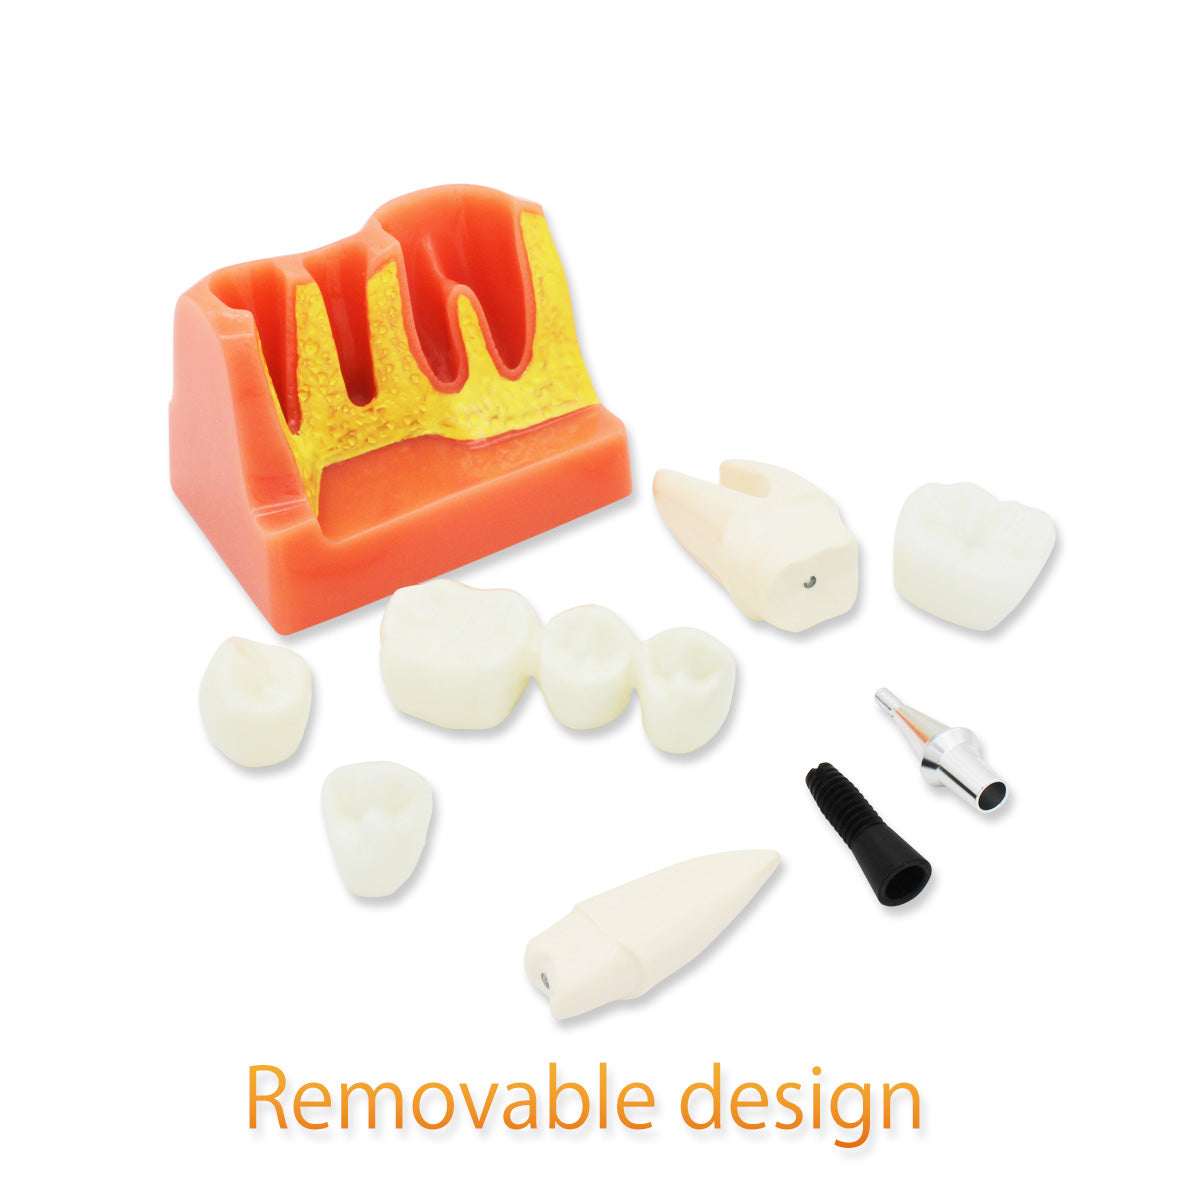 Dental Teeth Model,Transparent Dental Implant Teeth Model Dentist Standard Disease Removable Tooth Pathological Teaching Model（D-IP）